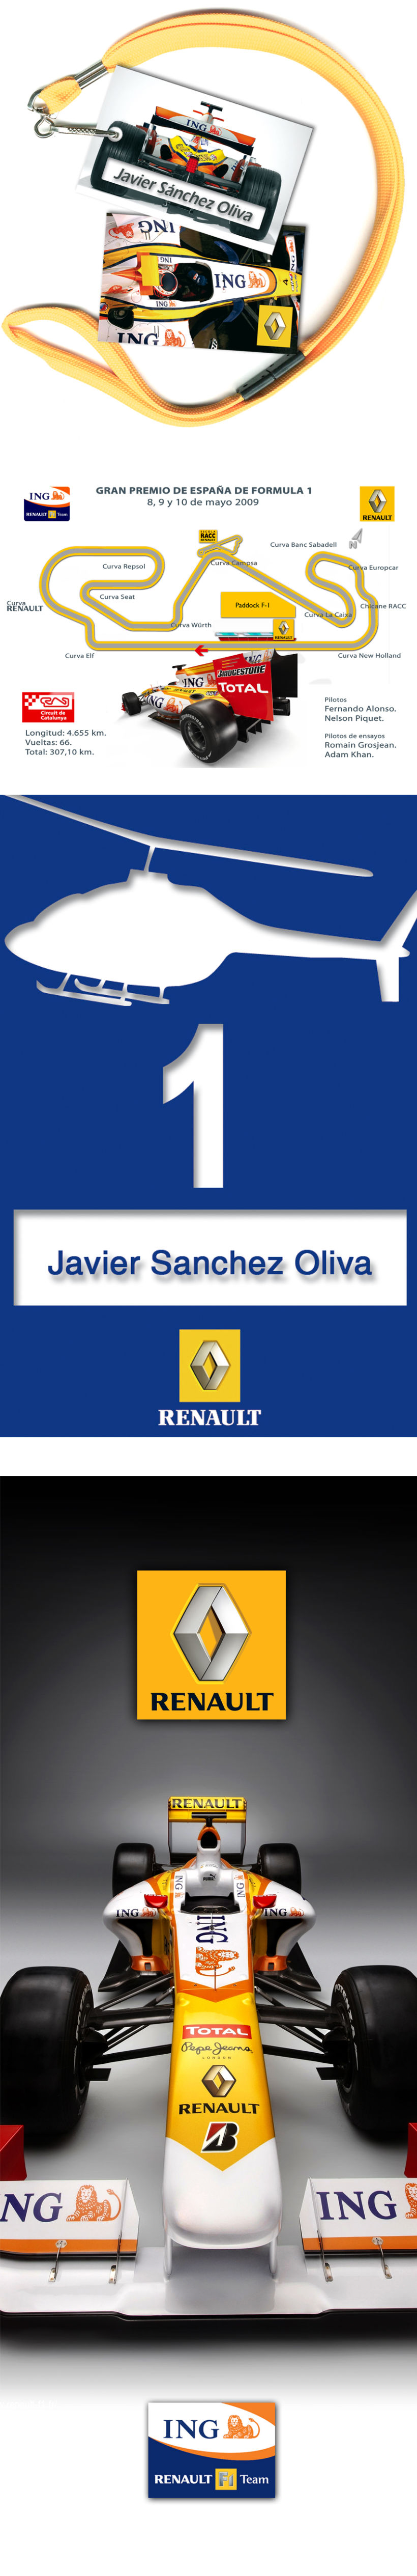 Renault Gran Premio de Montmeló 2